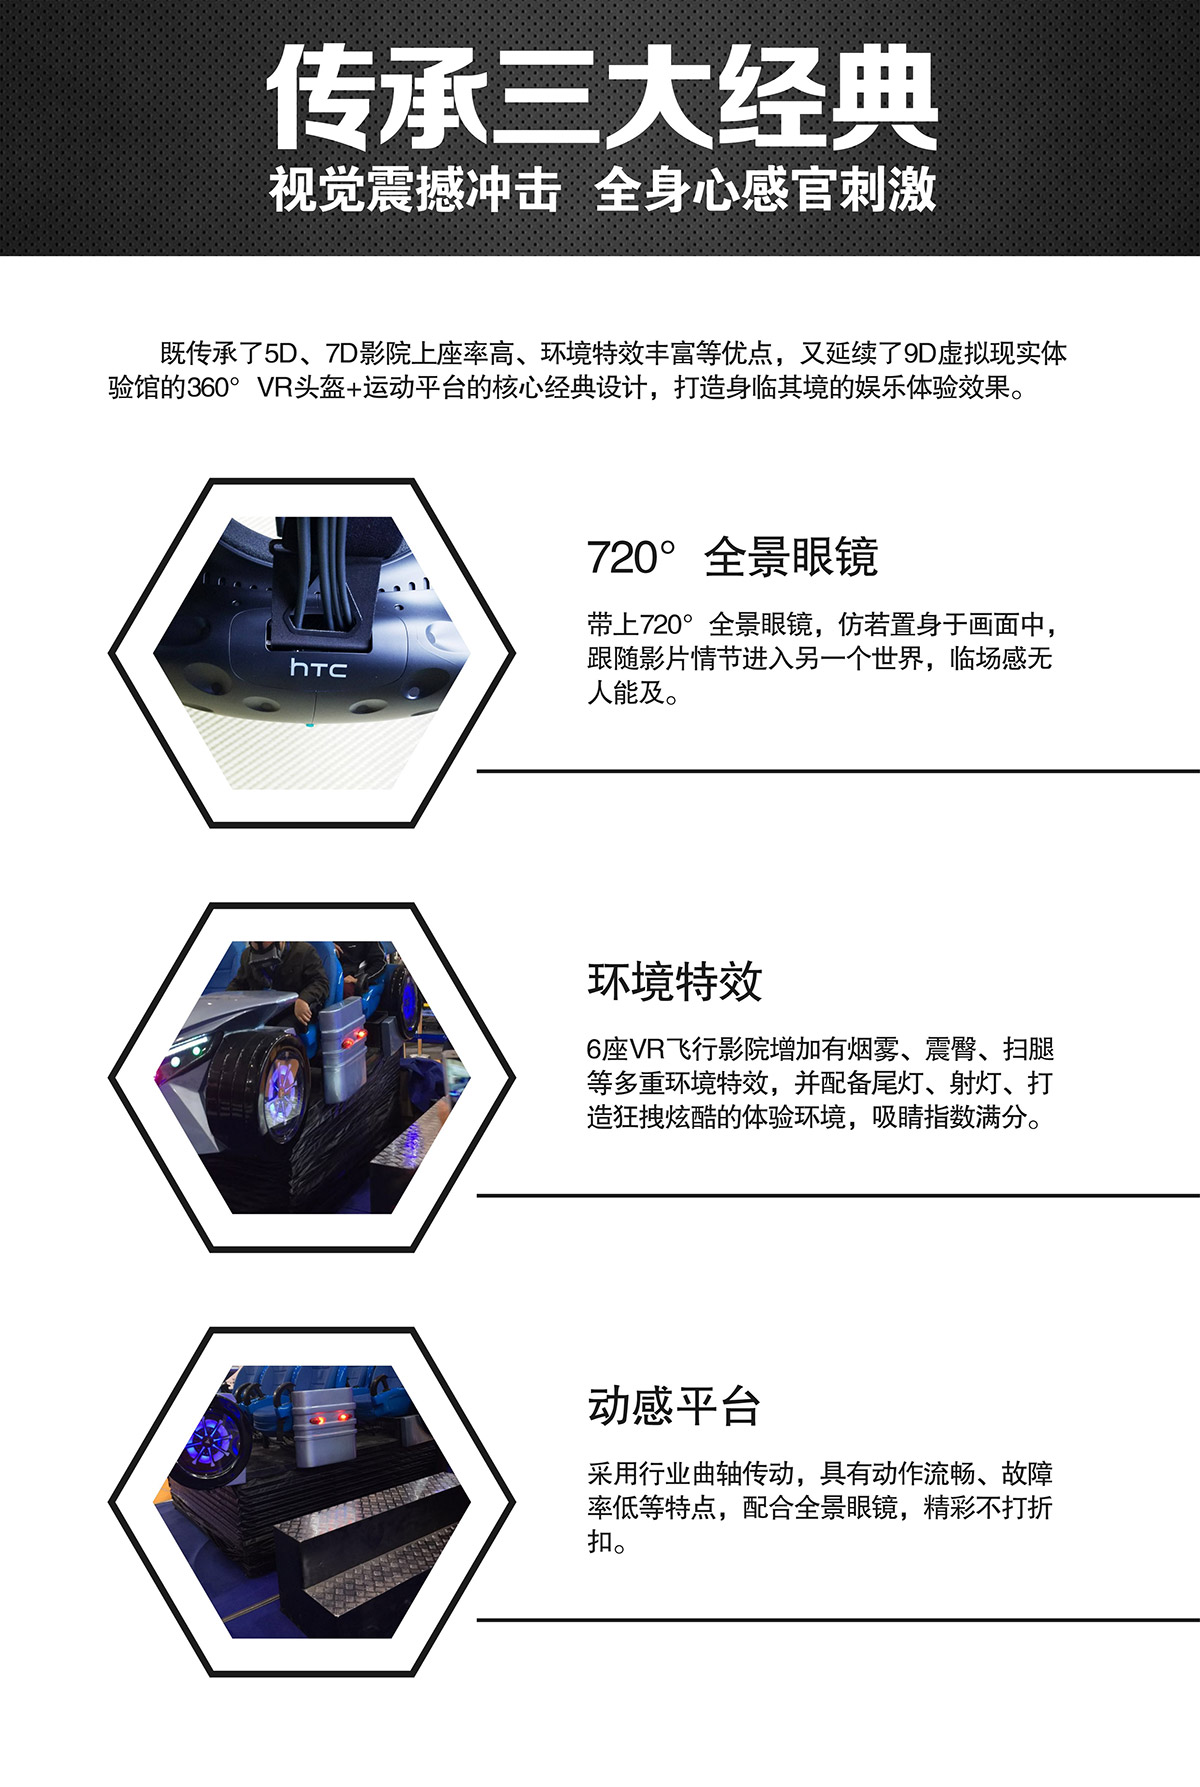 VR台风虚拟飞行体验馆视觉震撼冲击.jpg